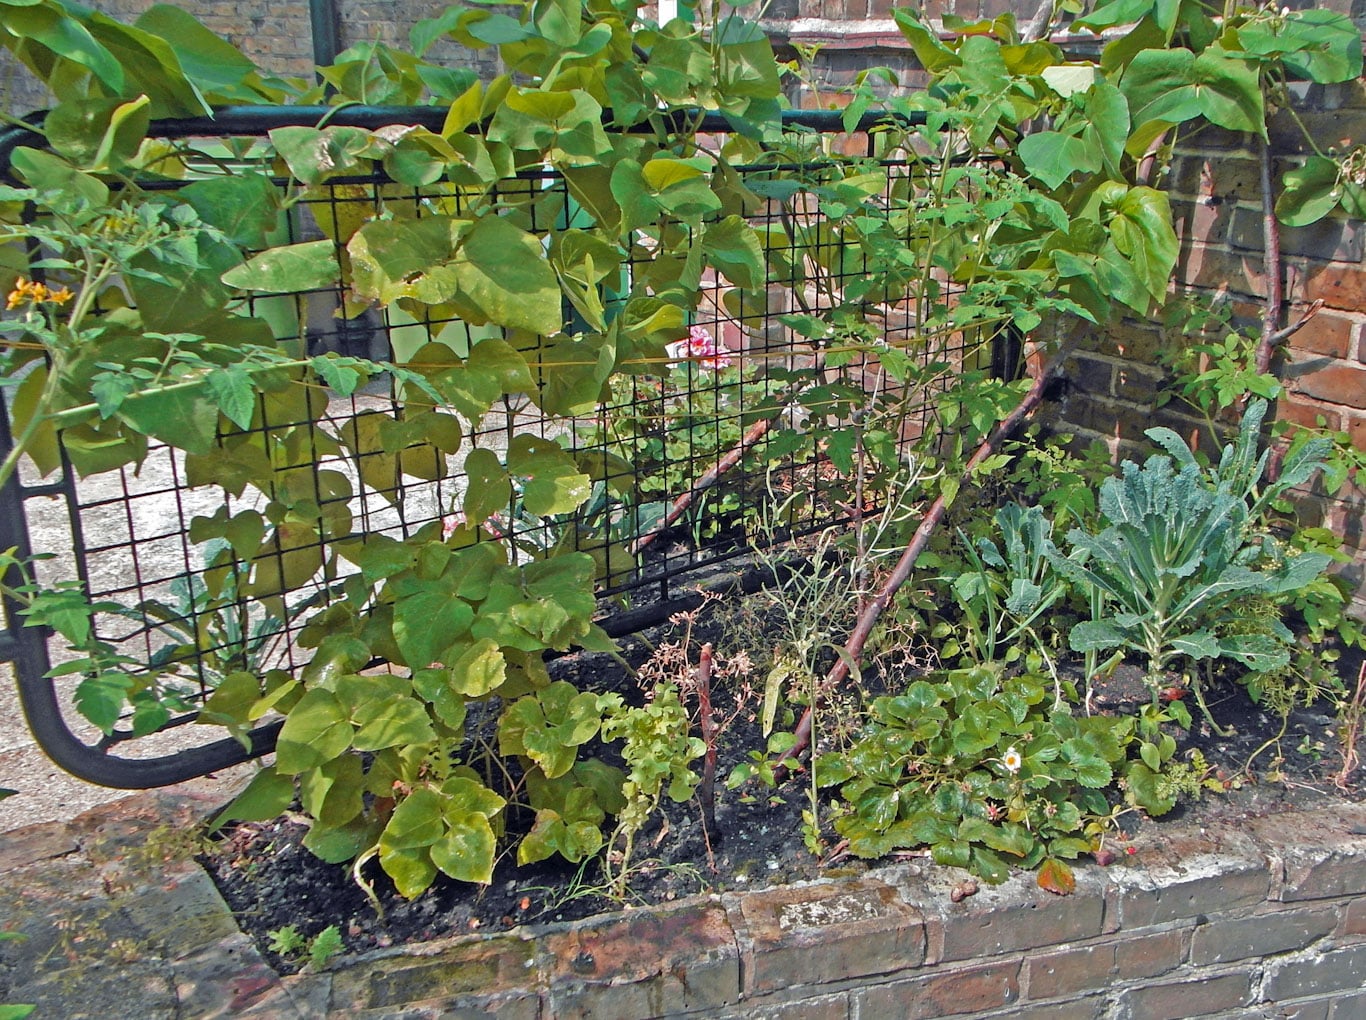 Vegetables growing in a yard